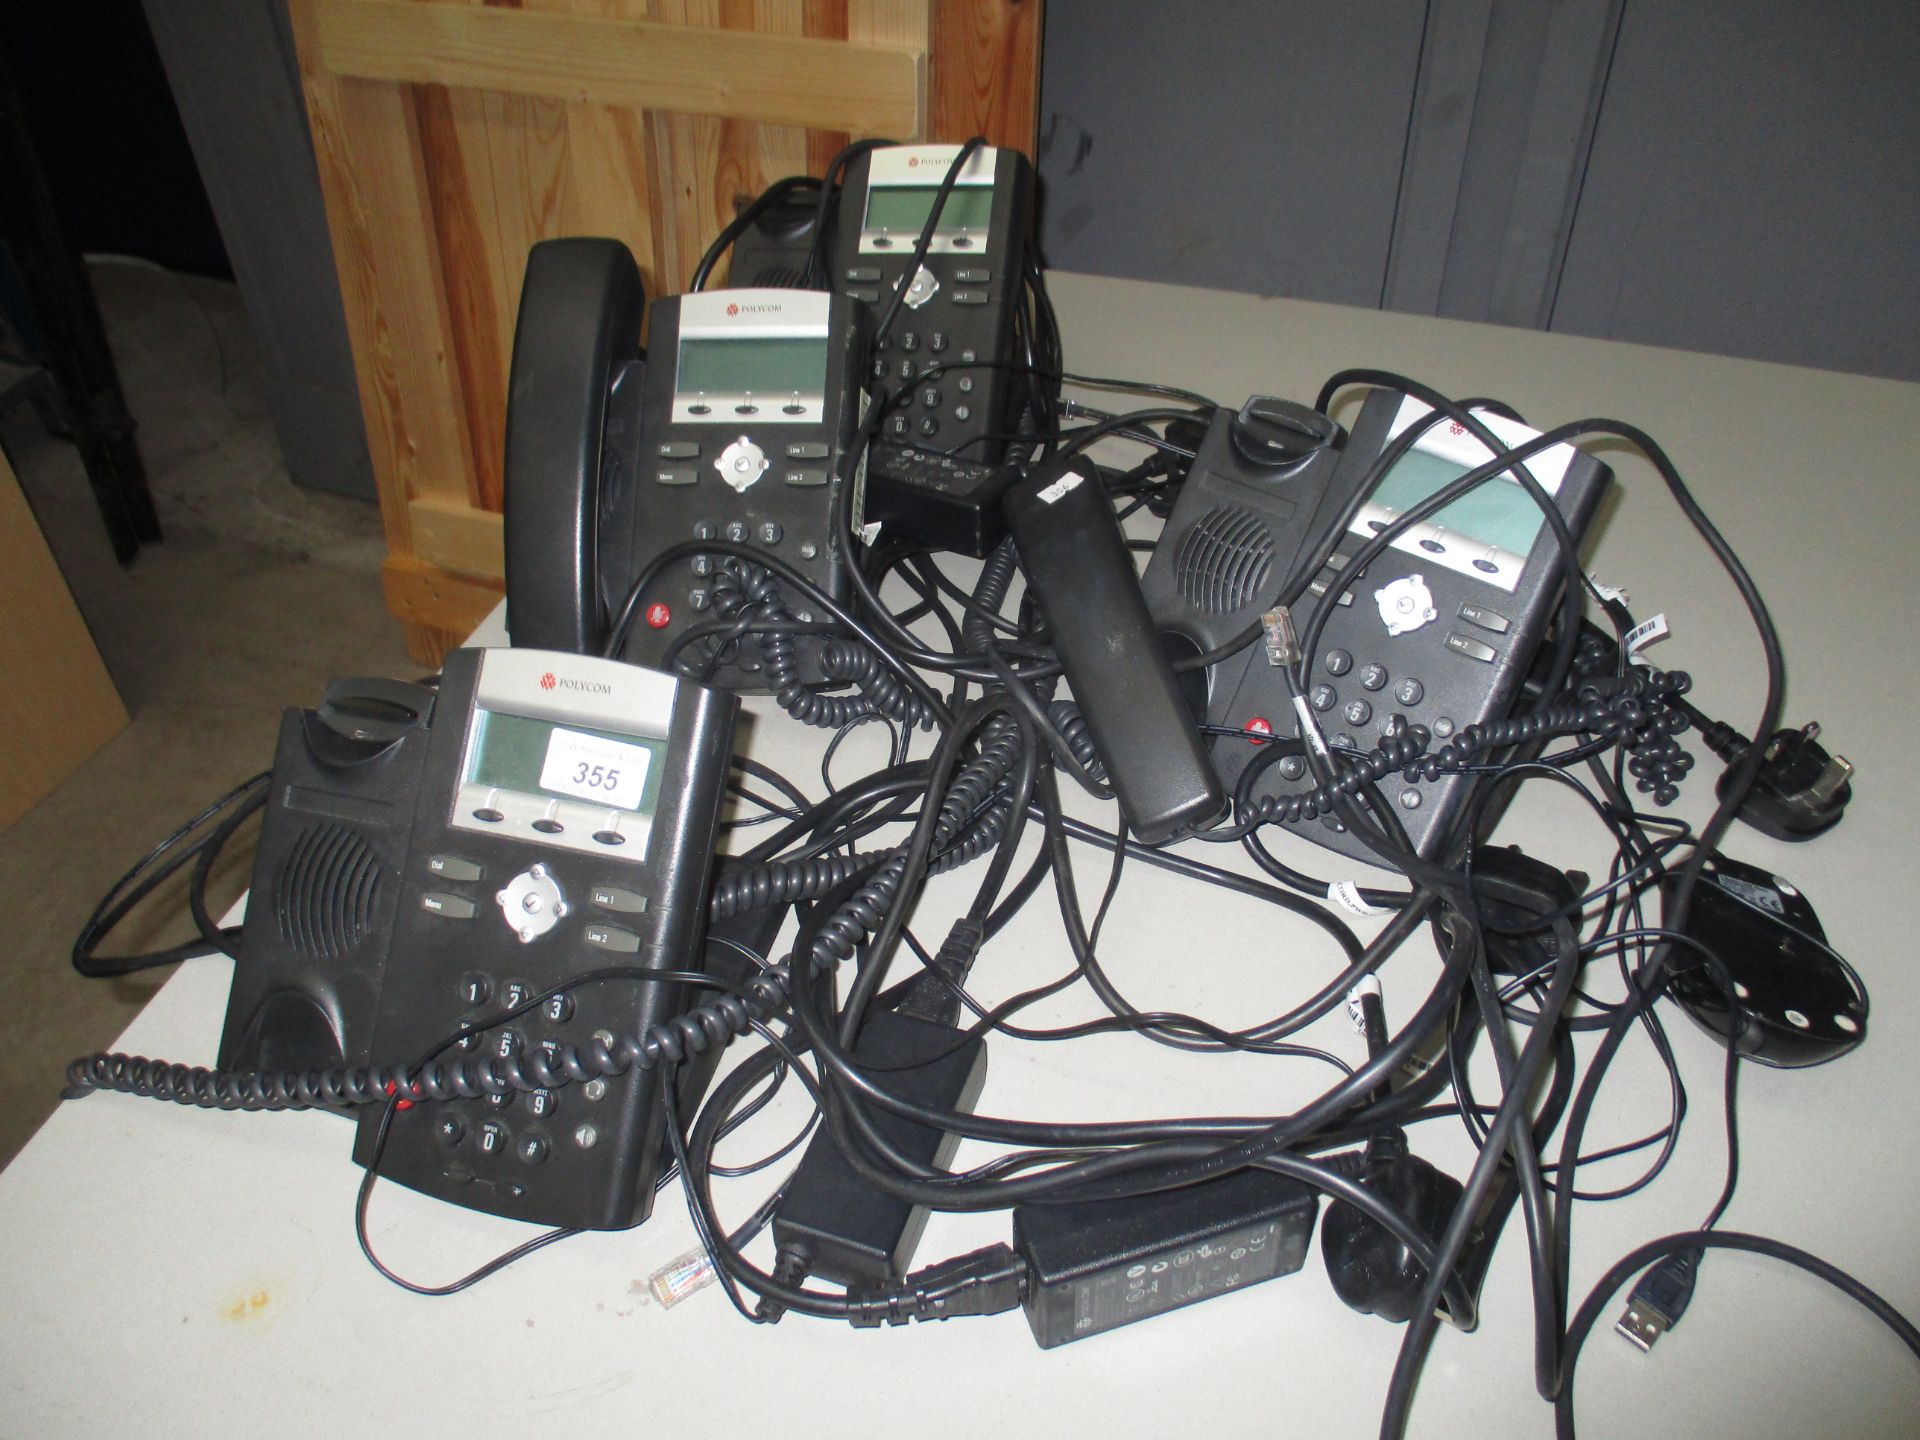 4 x Polycom digital telephones with power adaptors